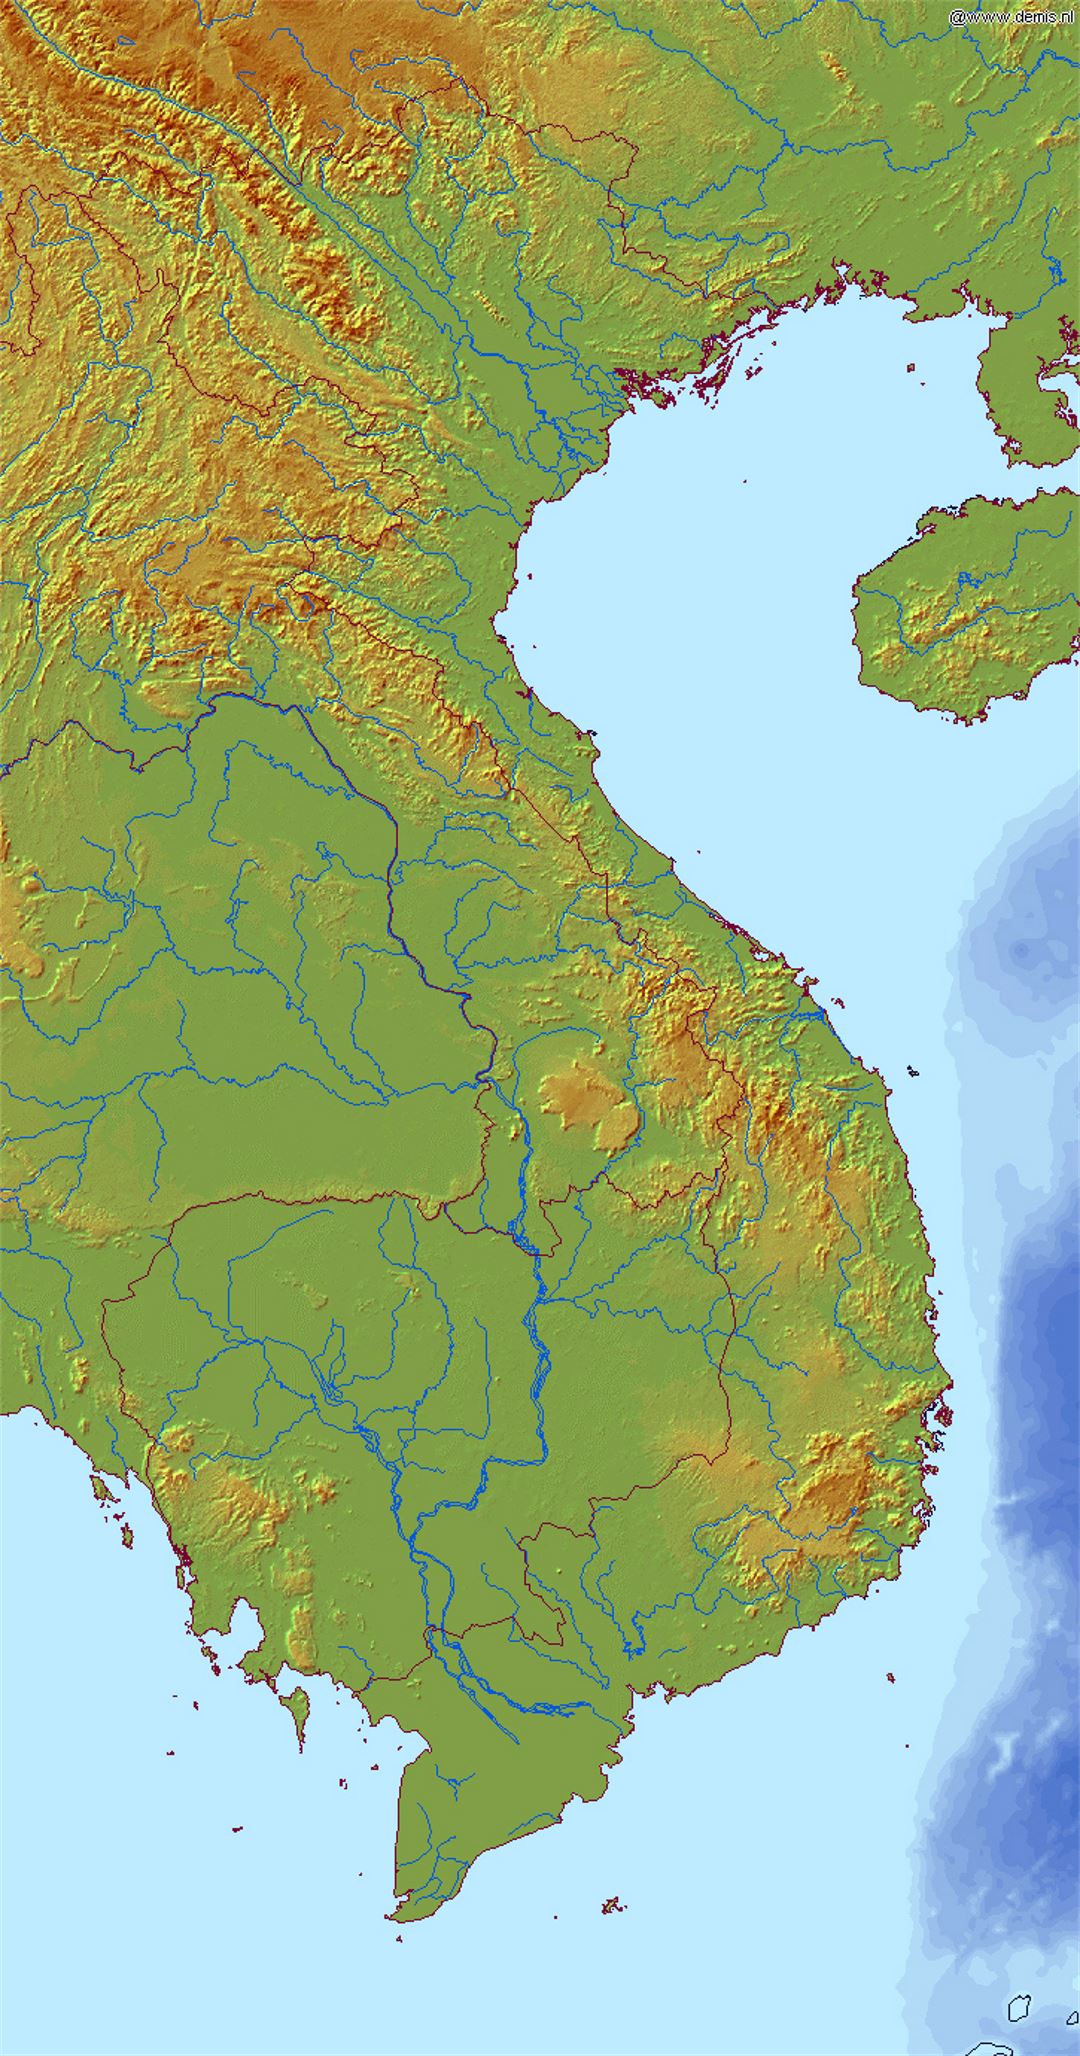 Detailed relief map of Vietnam